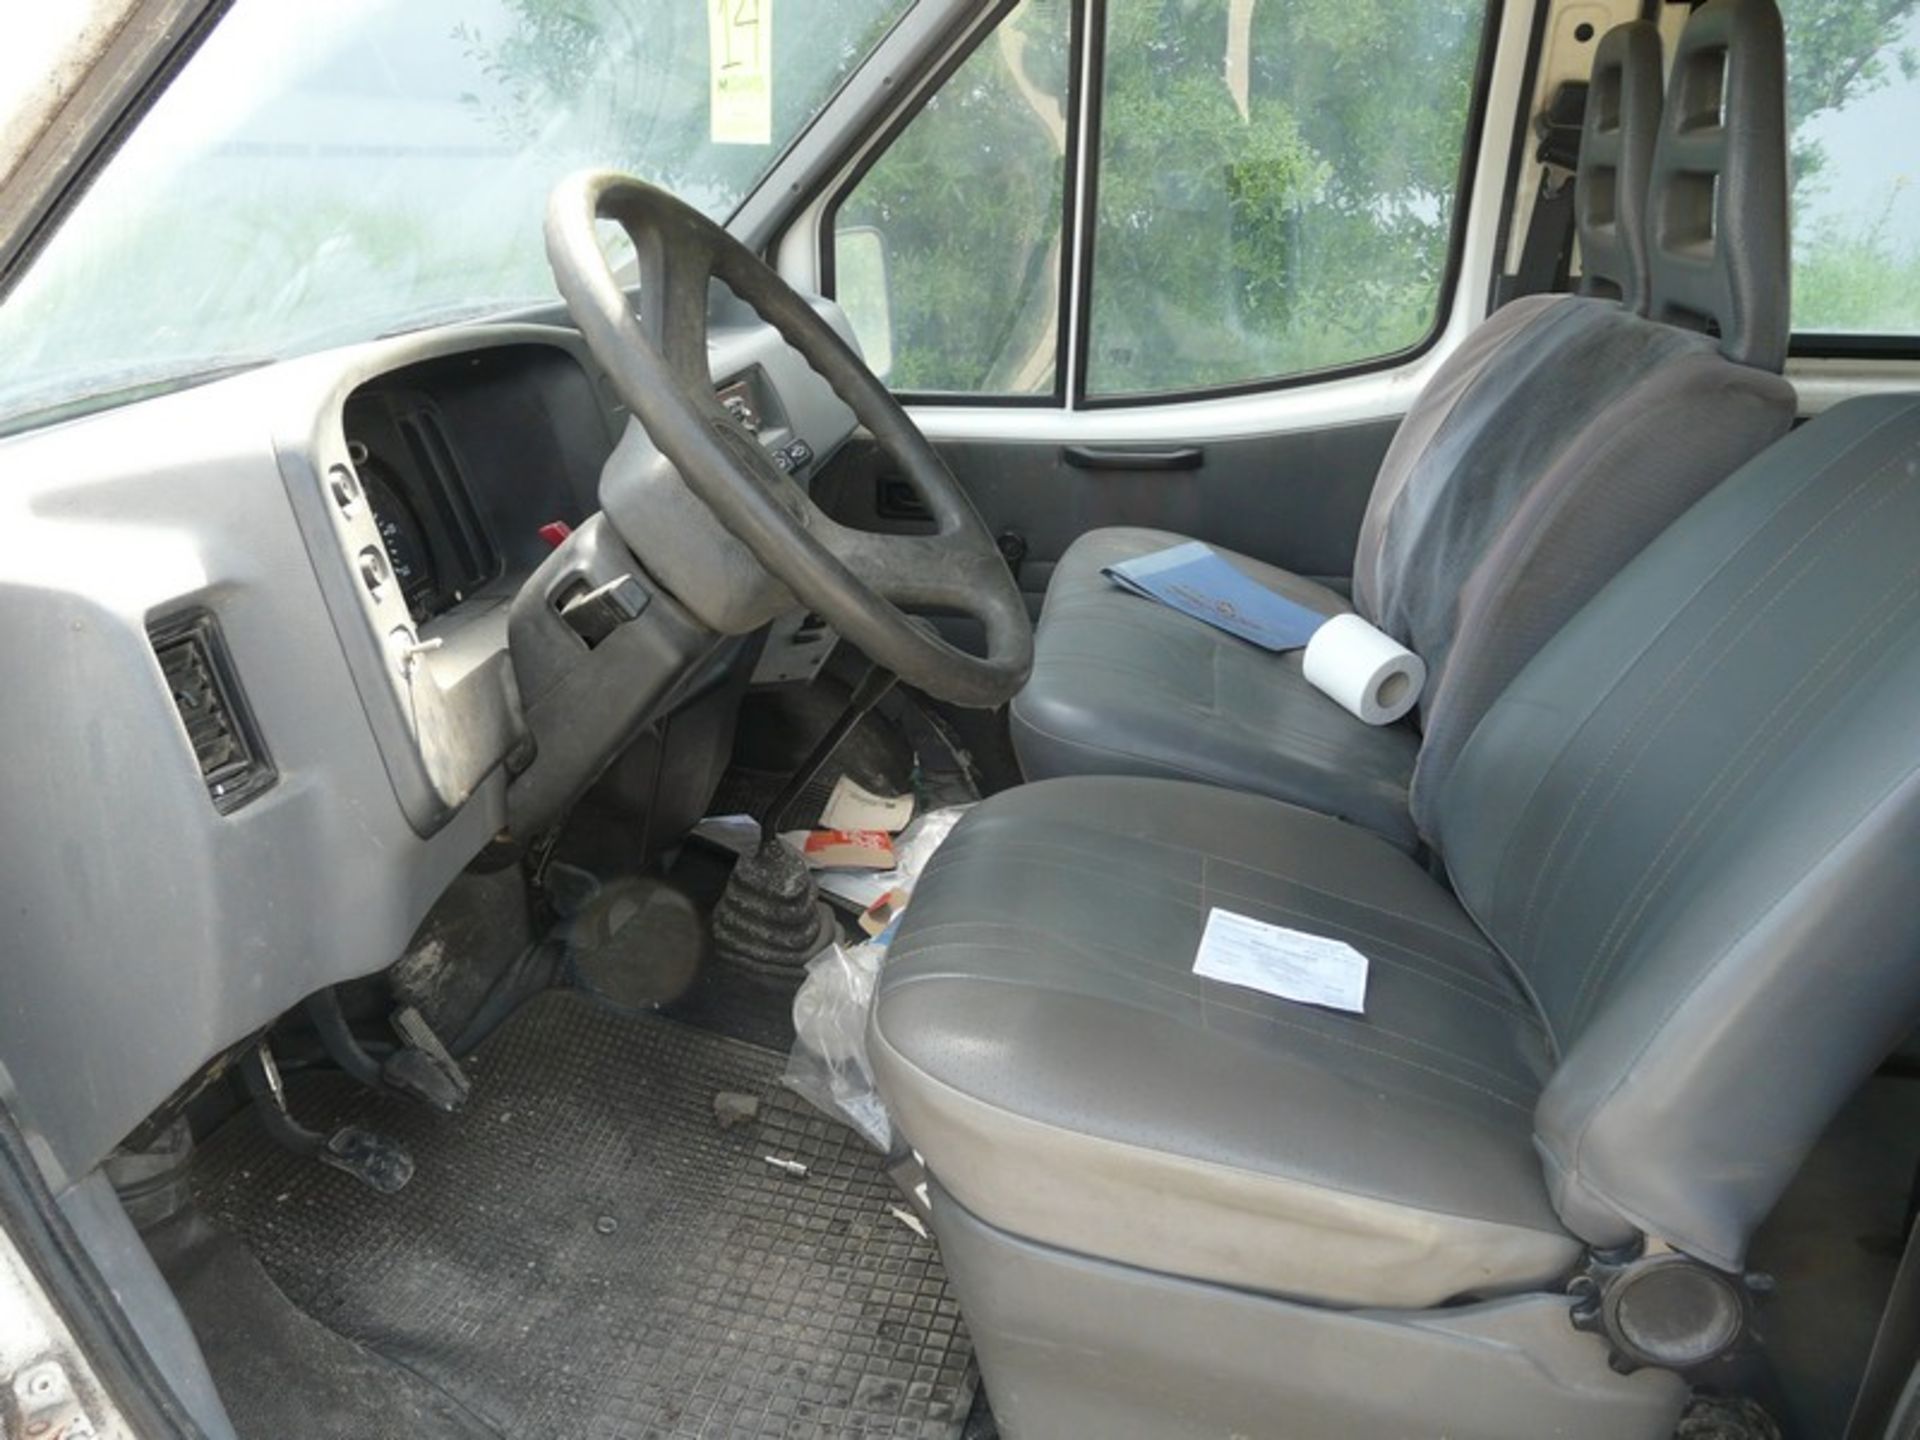 FORD TRANSIT, bus115, diesel, KM 212503, 14+1 seats, REG NBB 8161, Year: 1991 (Located in Greece - - Bild 8 aus 10